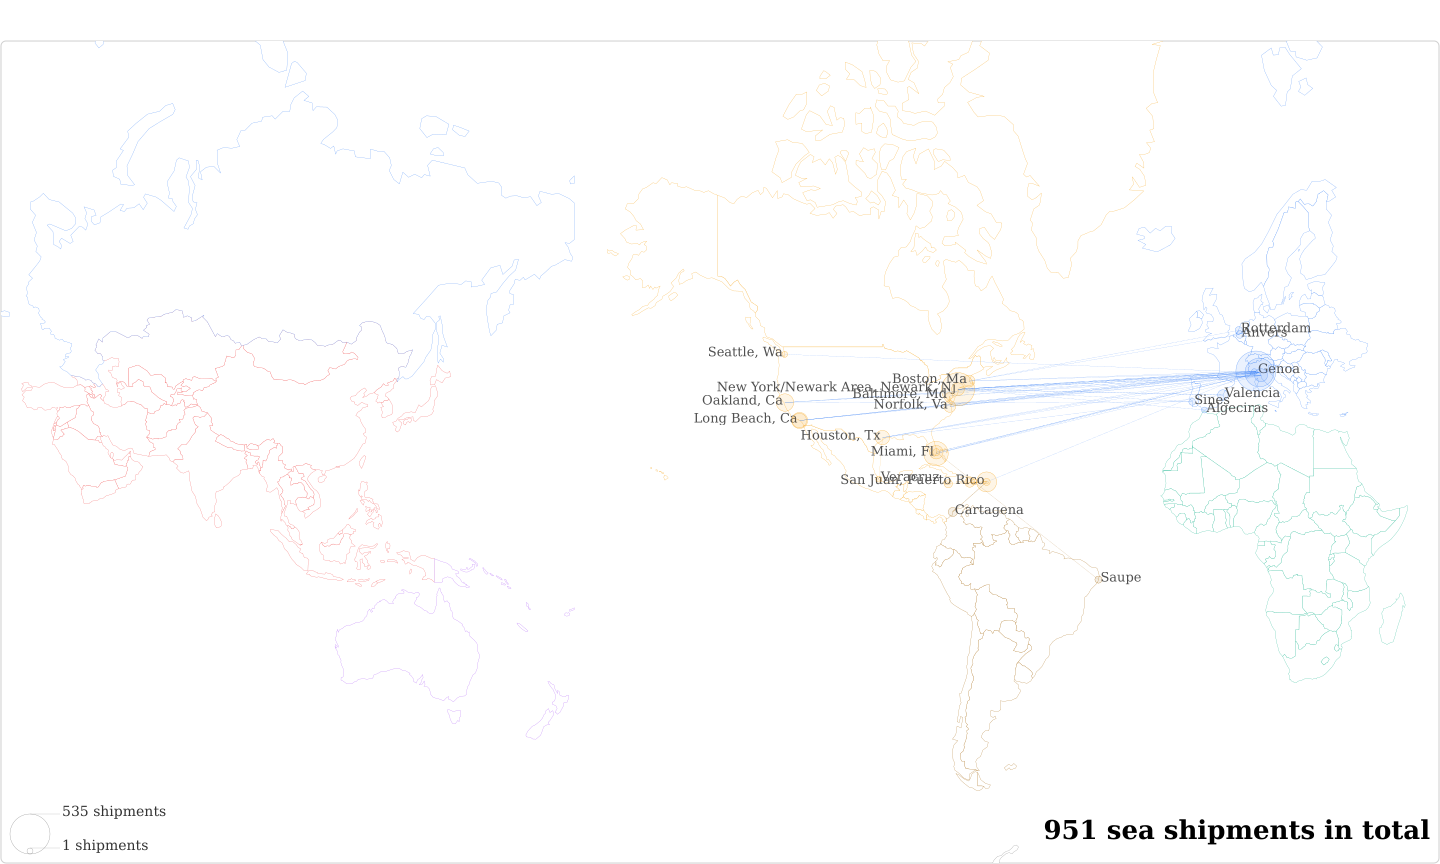 Gallotti & Radice's Imports Per Country Map